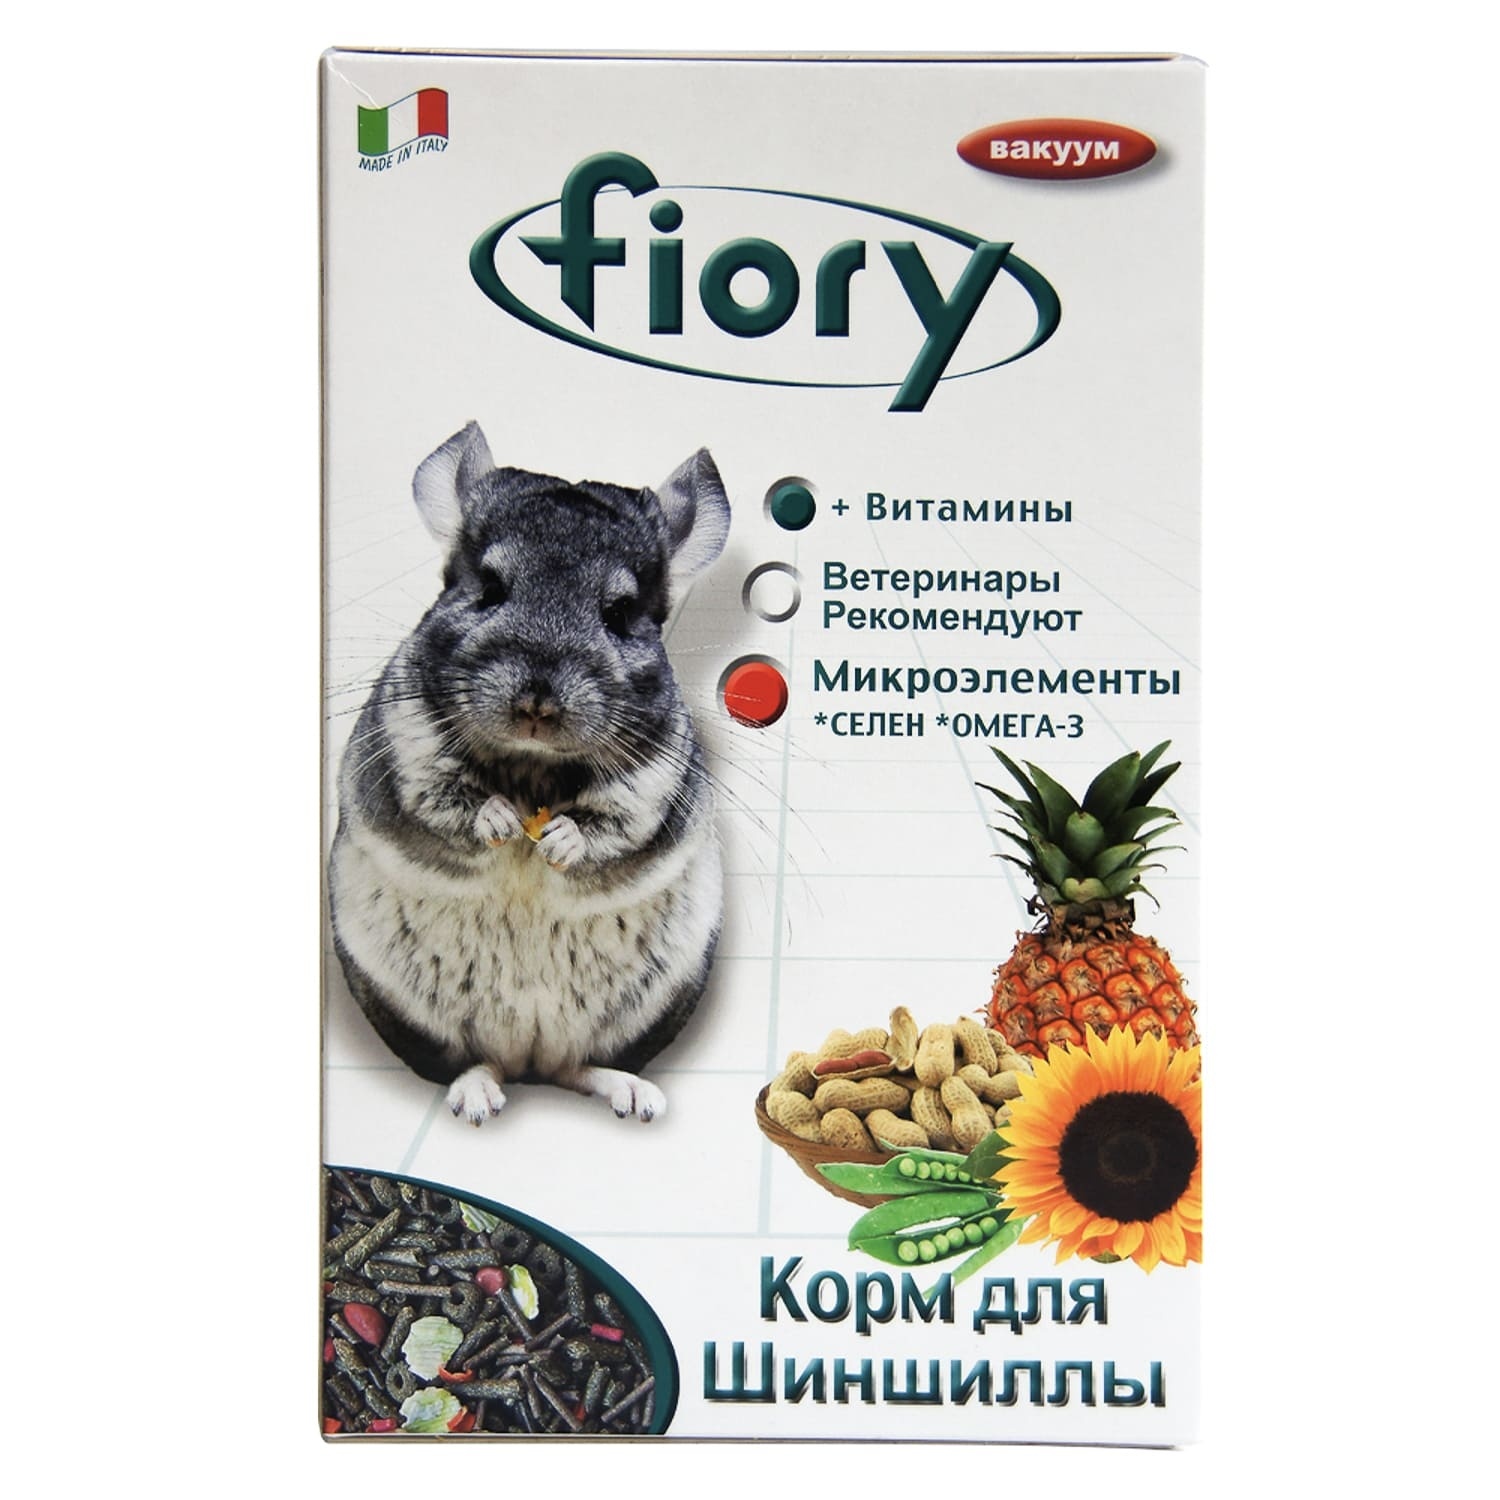 Fiory Fiory корм для шиншилл (800 г) fiory cincy сухой корм для шиншилл 800 г